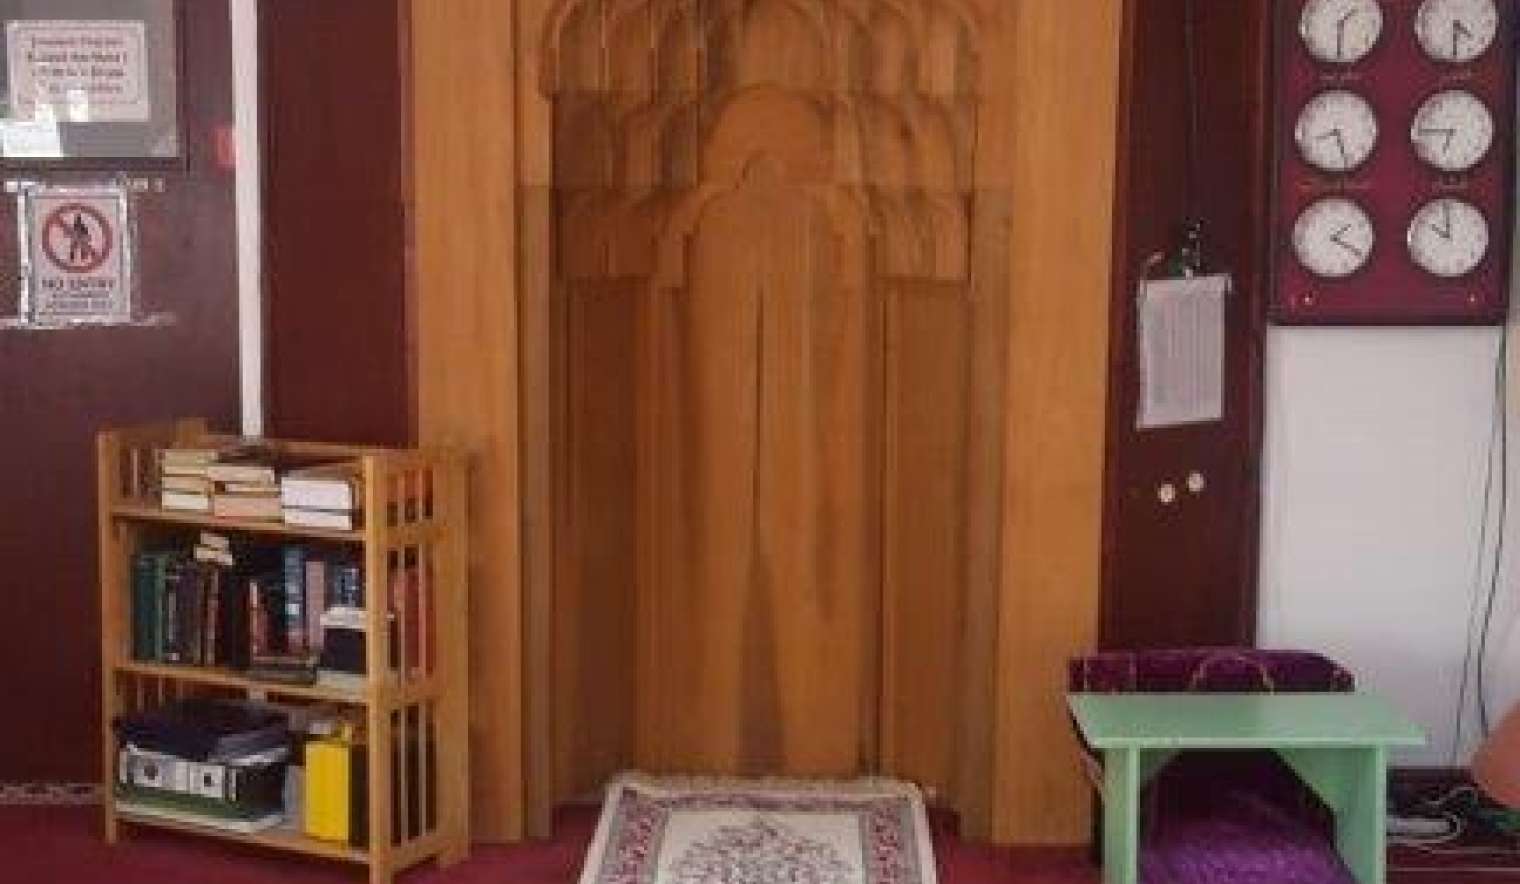 Cambridge Abu Bakr Masjid